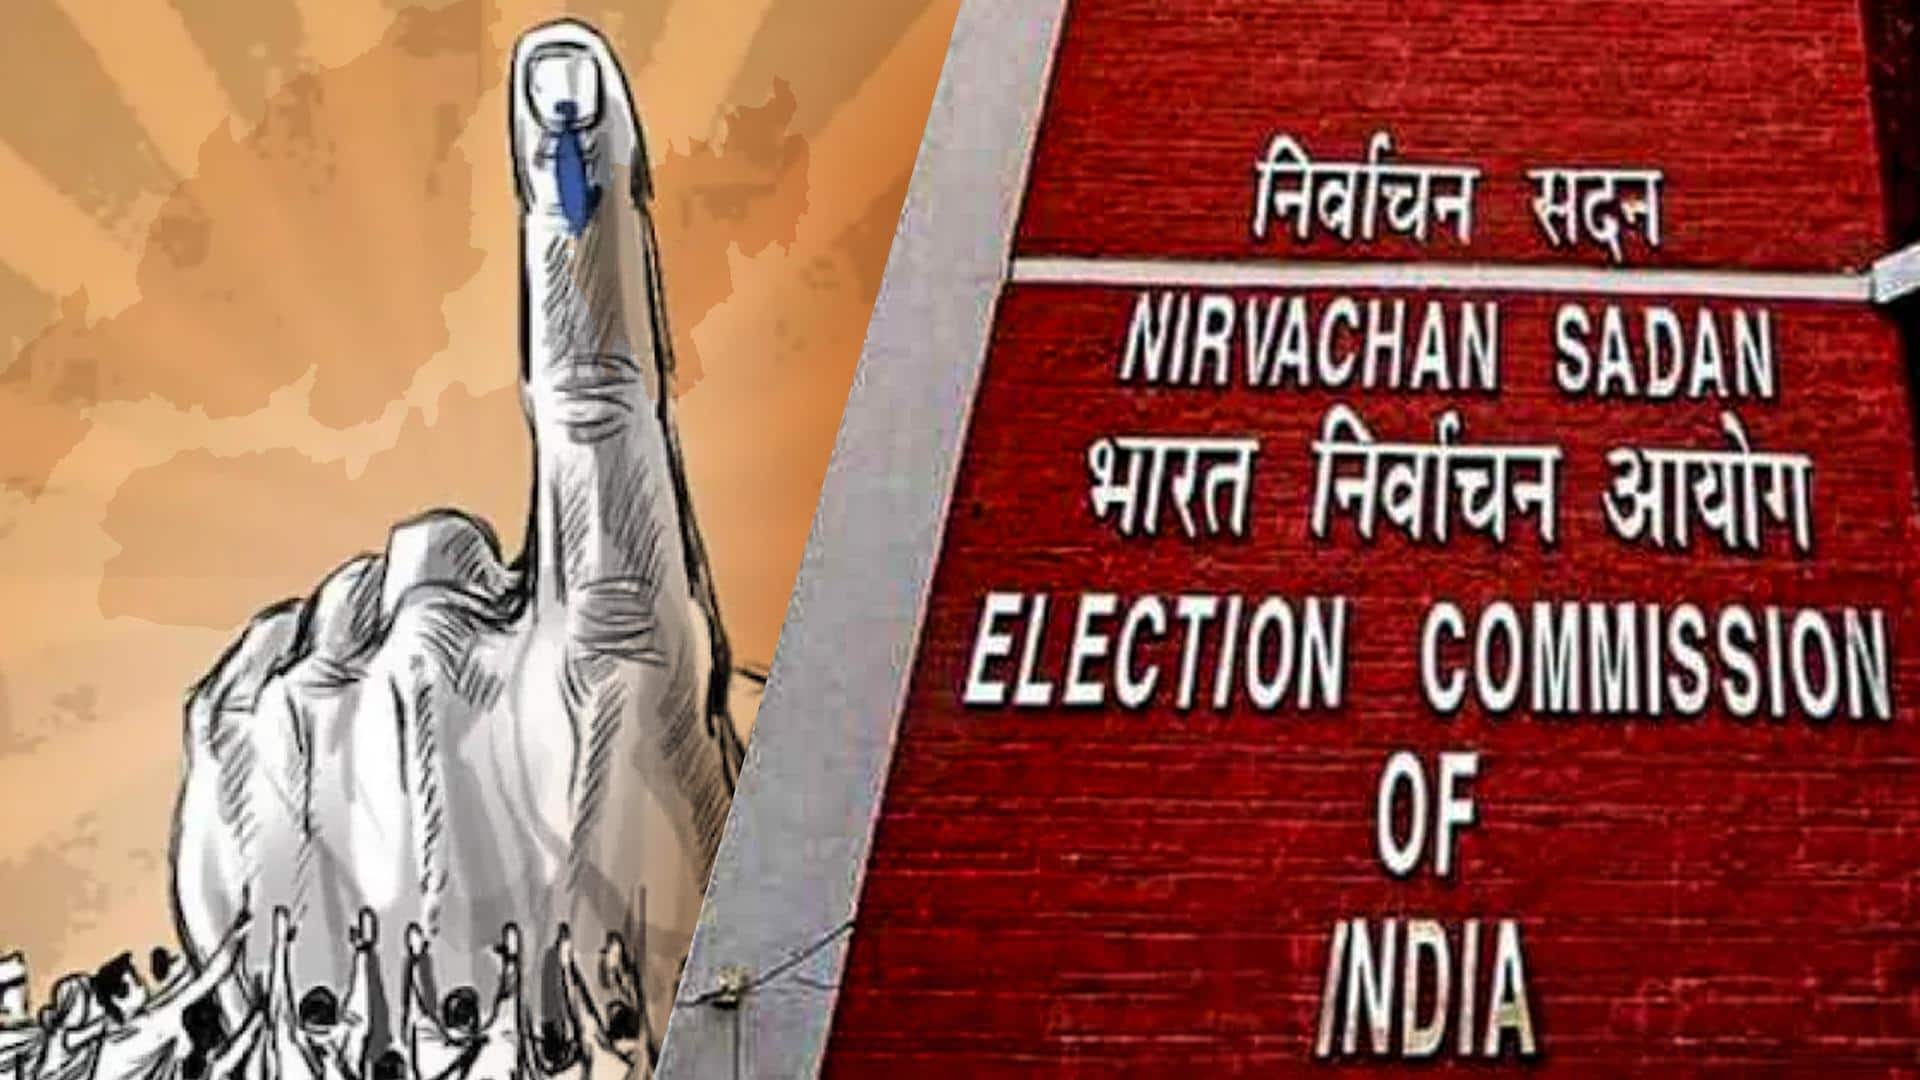 Tripura elections on February 16; Nagaland, Meghalaya on February 27